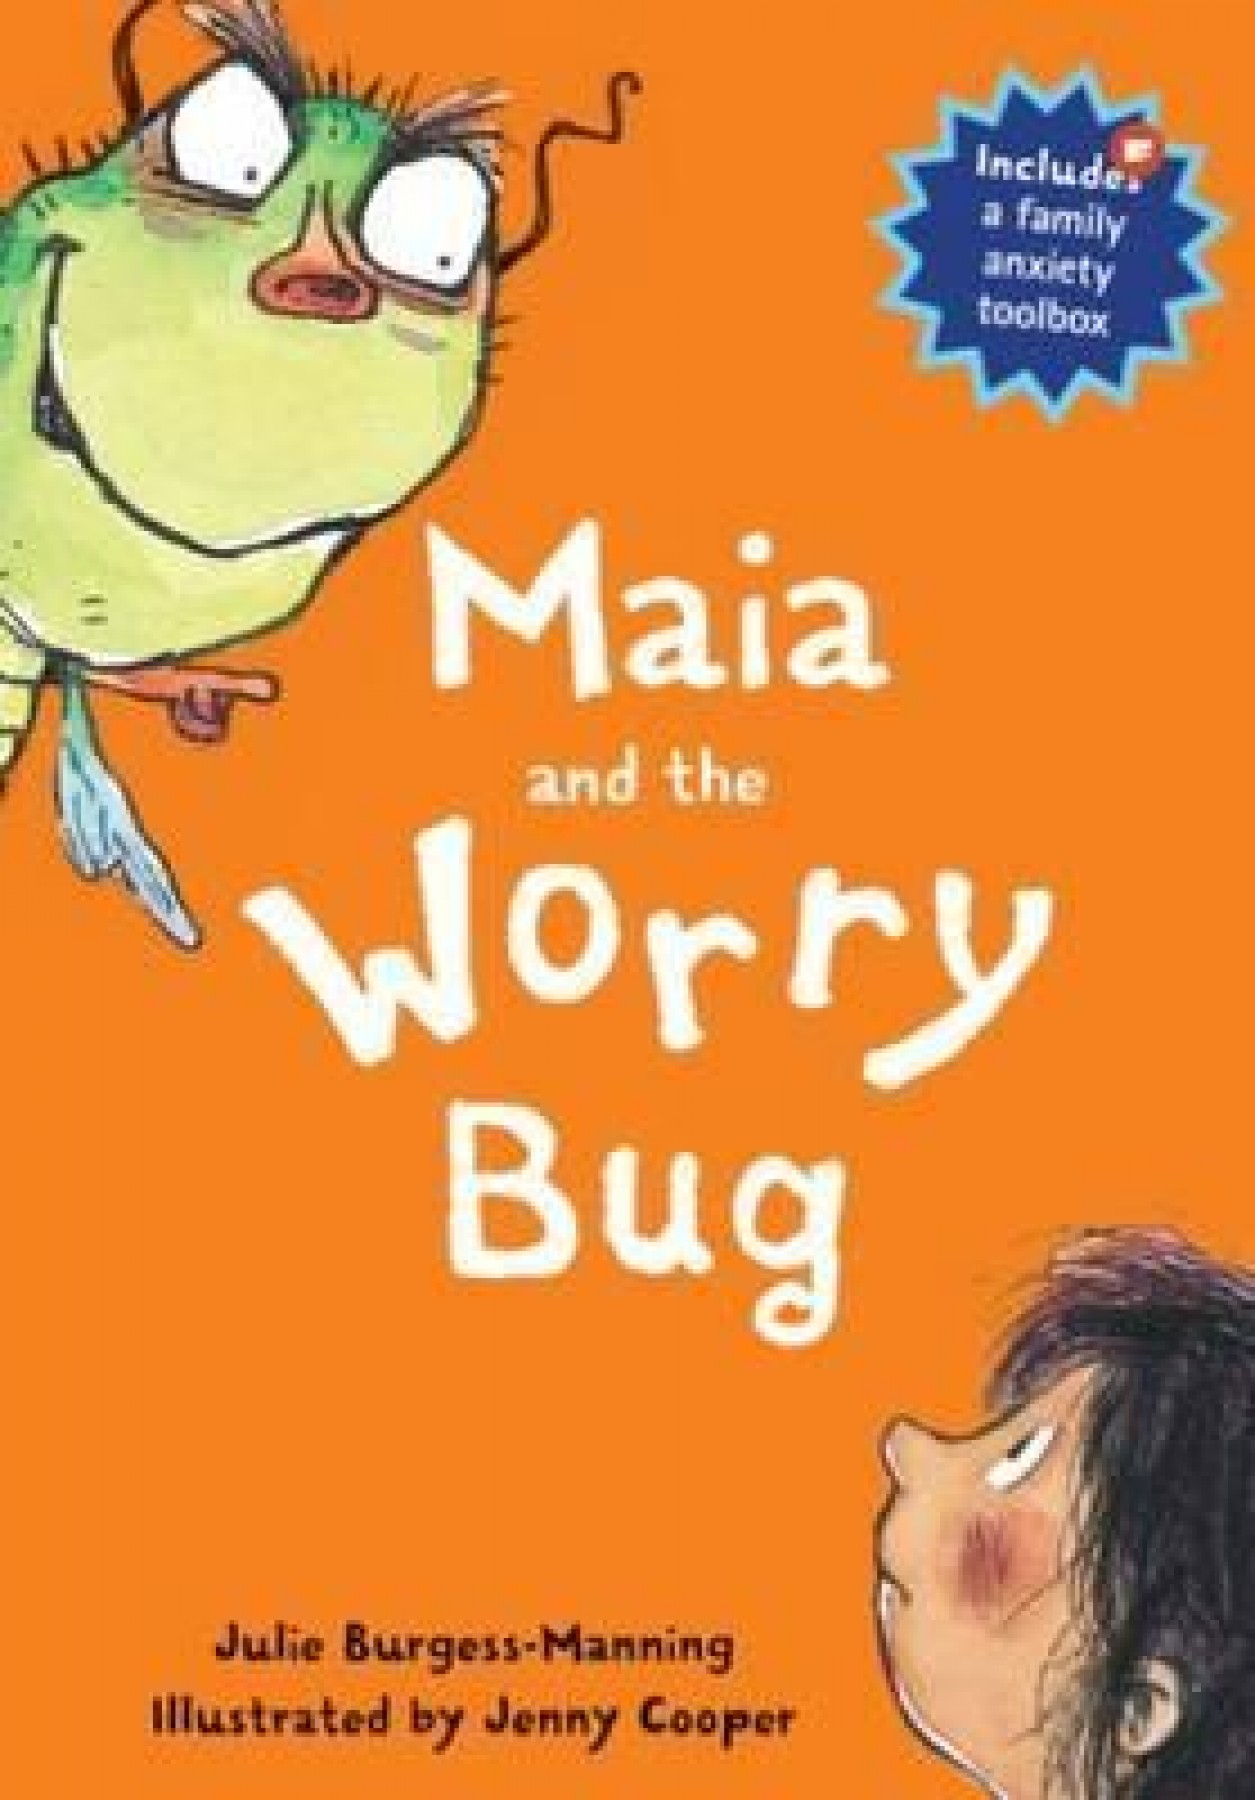 Maia and the worry bug